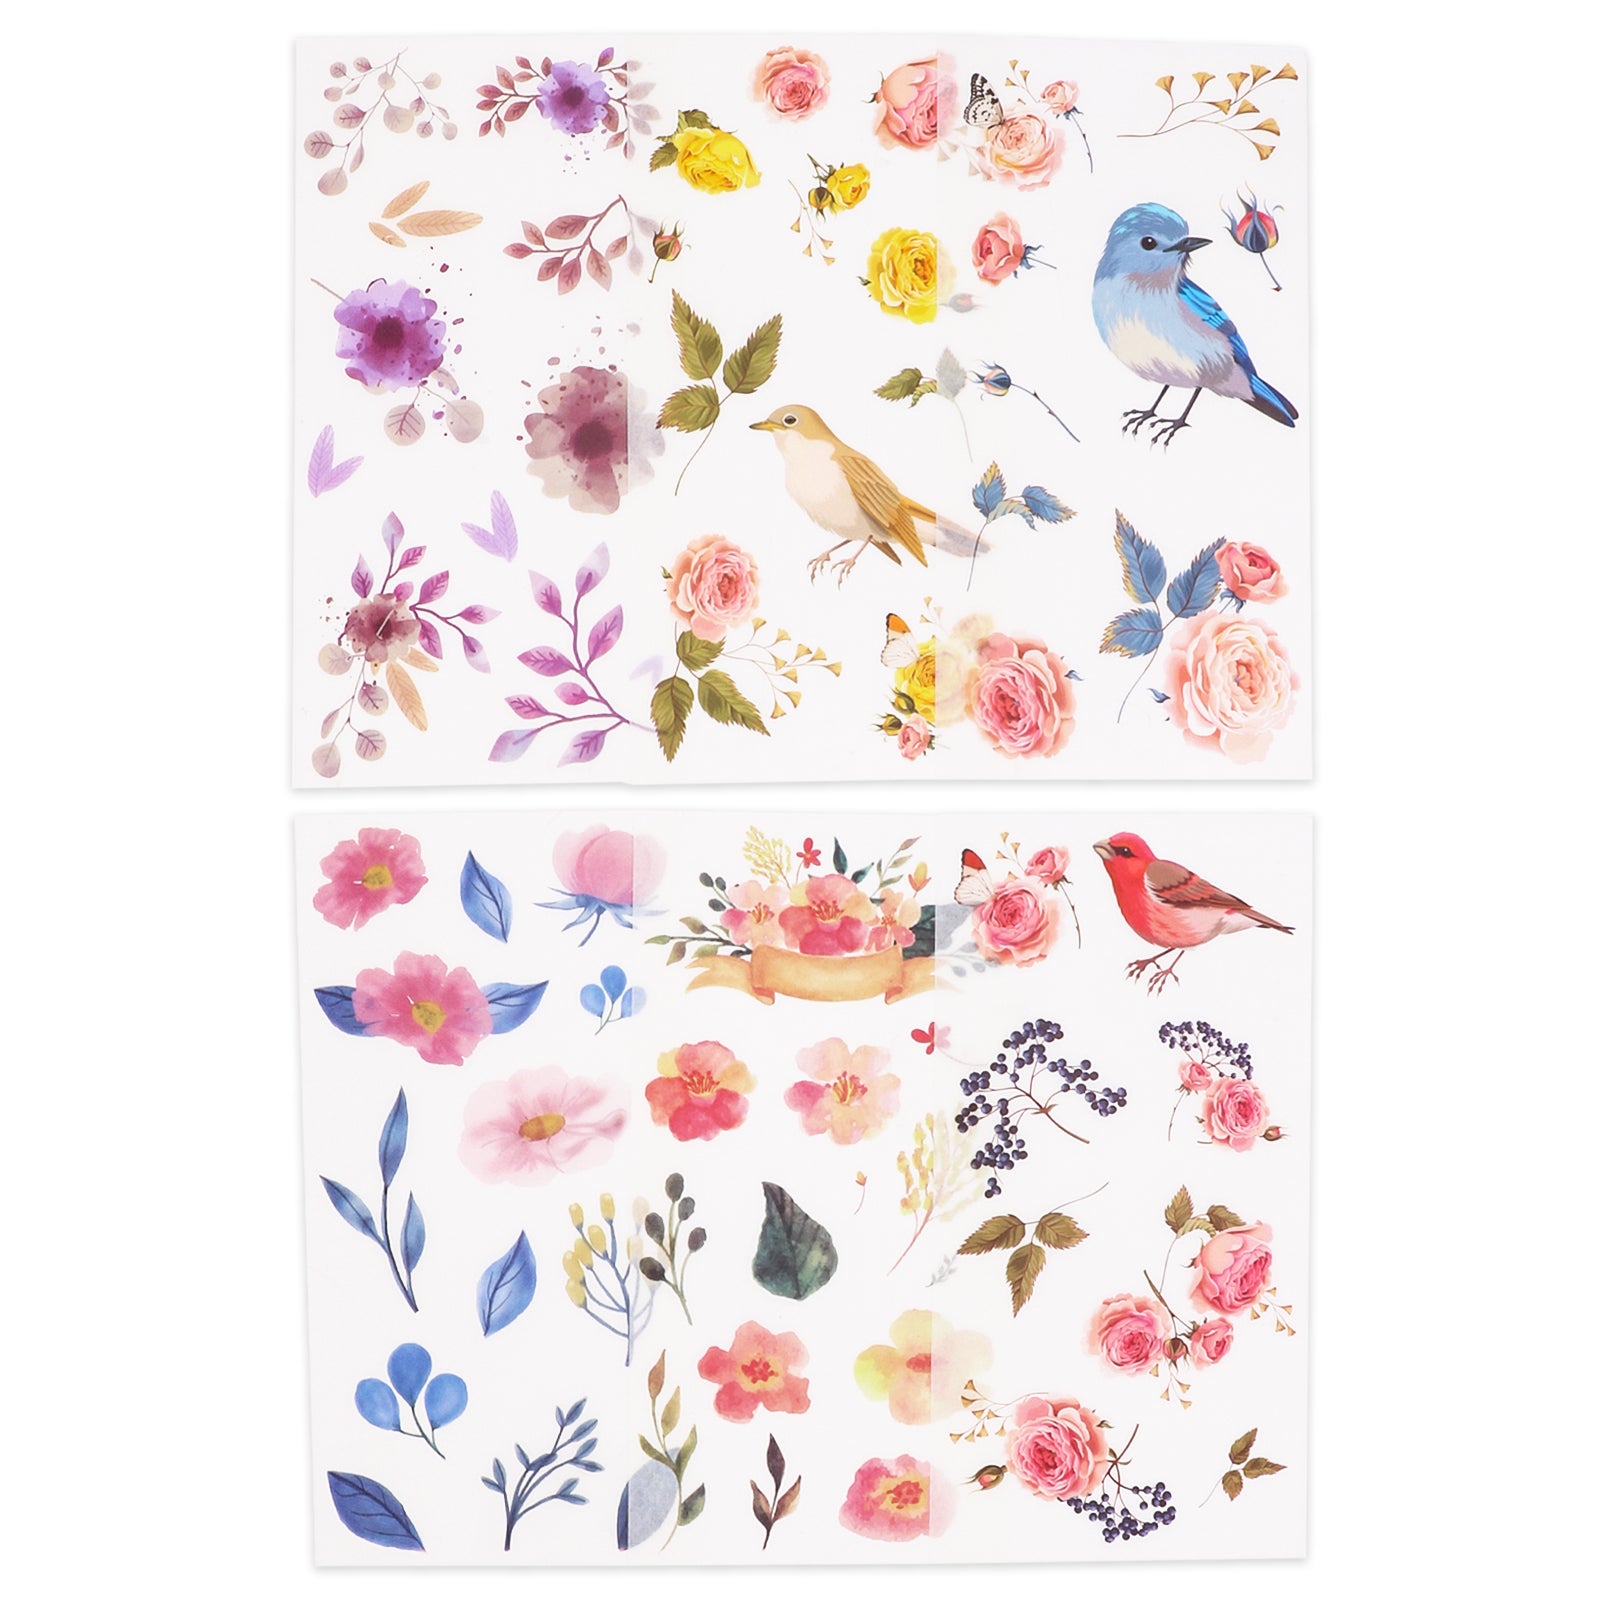 Knaid Watercolor Birds and Flowers Stickers Set - Decorative Sticker for  Scrapbooking, Kid DIY Arts Crafts, Album, Bullet Journaling, Junk Journal